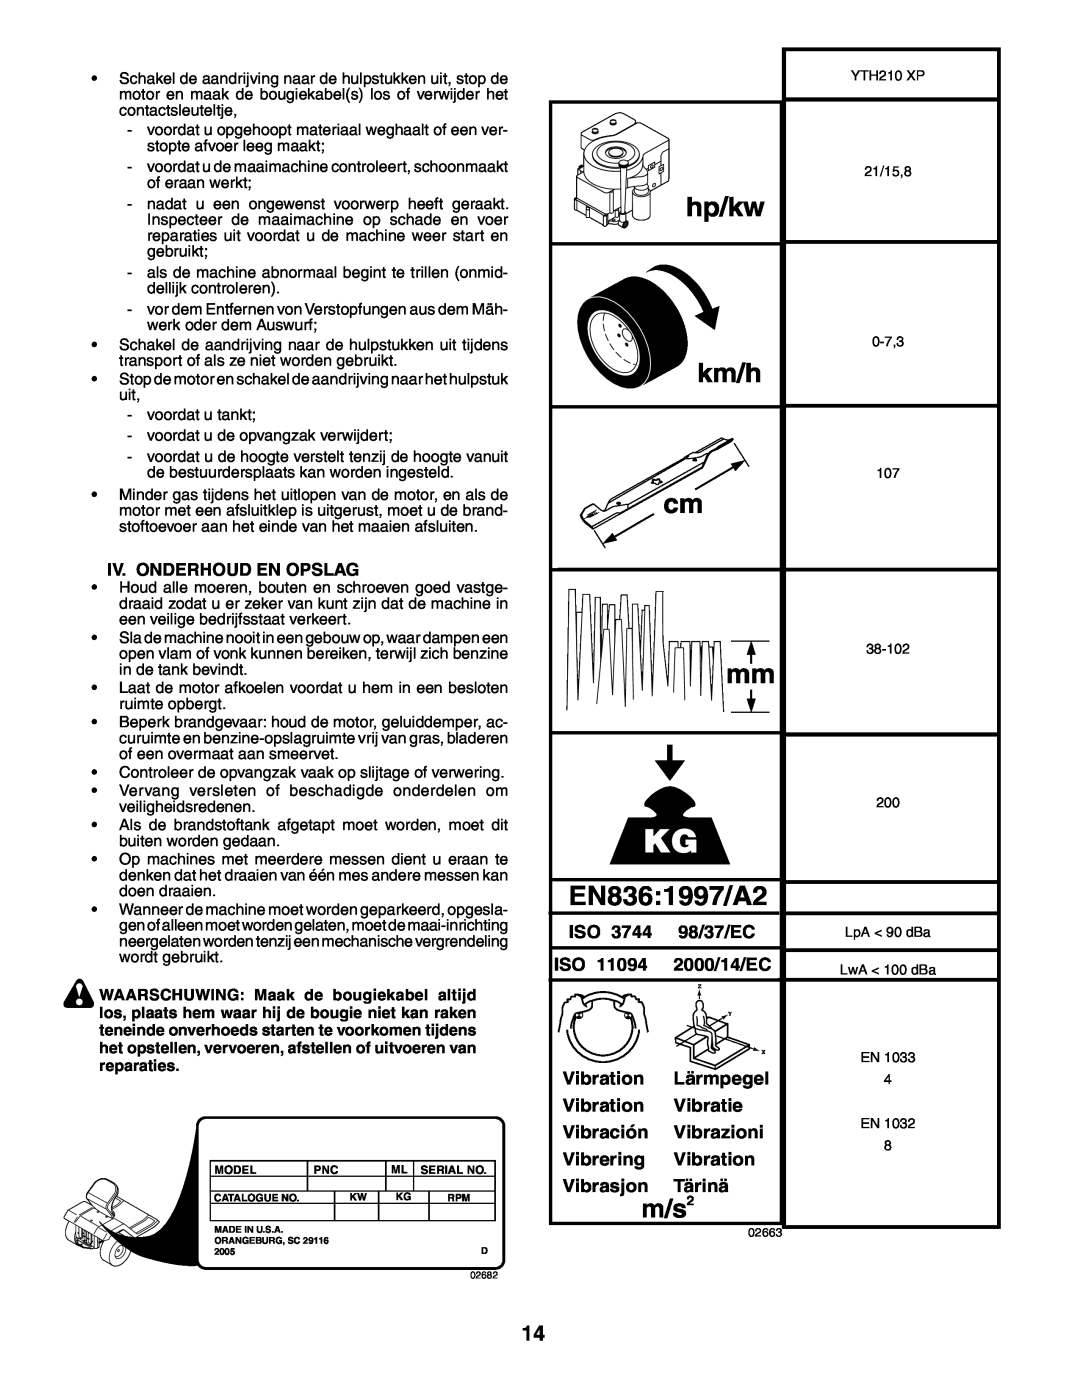 Husqvarna YTH210XP instruction manual EN8361997/A2, m/s2, Iv. Onderhoud En Opslag 